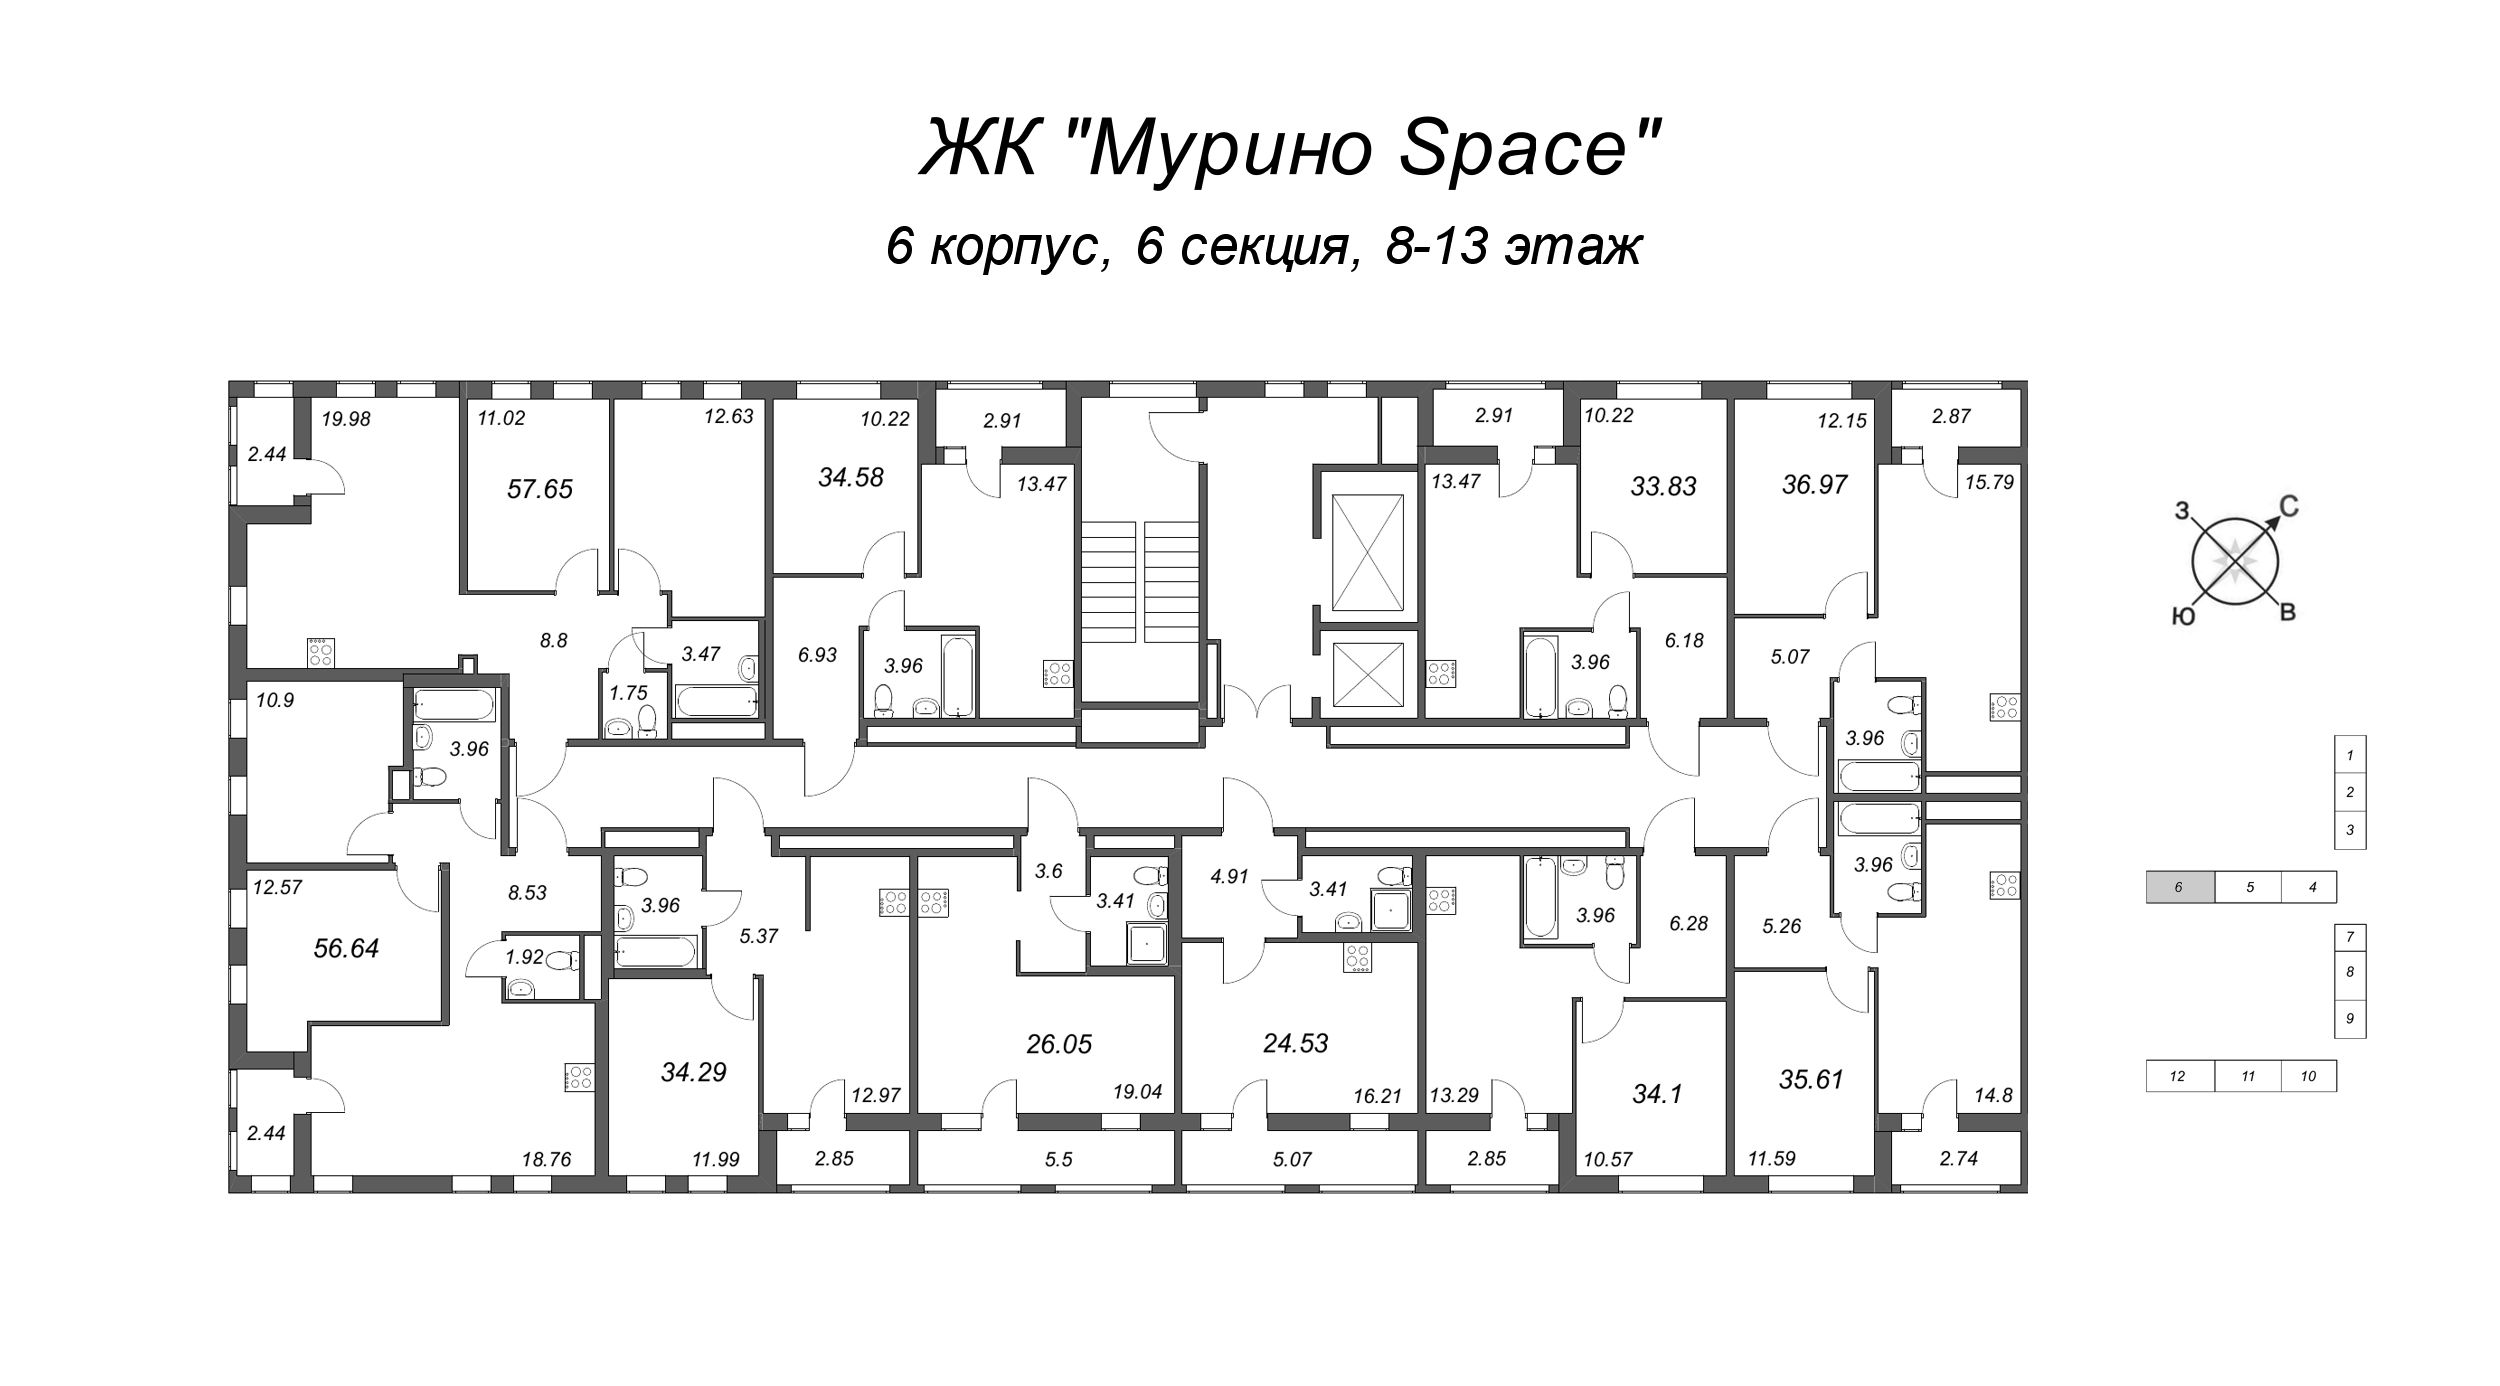 2-комнатная (Евро) квартира, 33.83 м² - планировка этажа